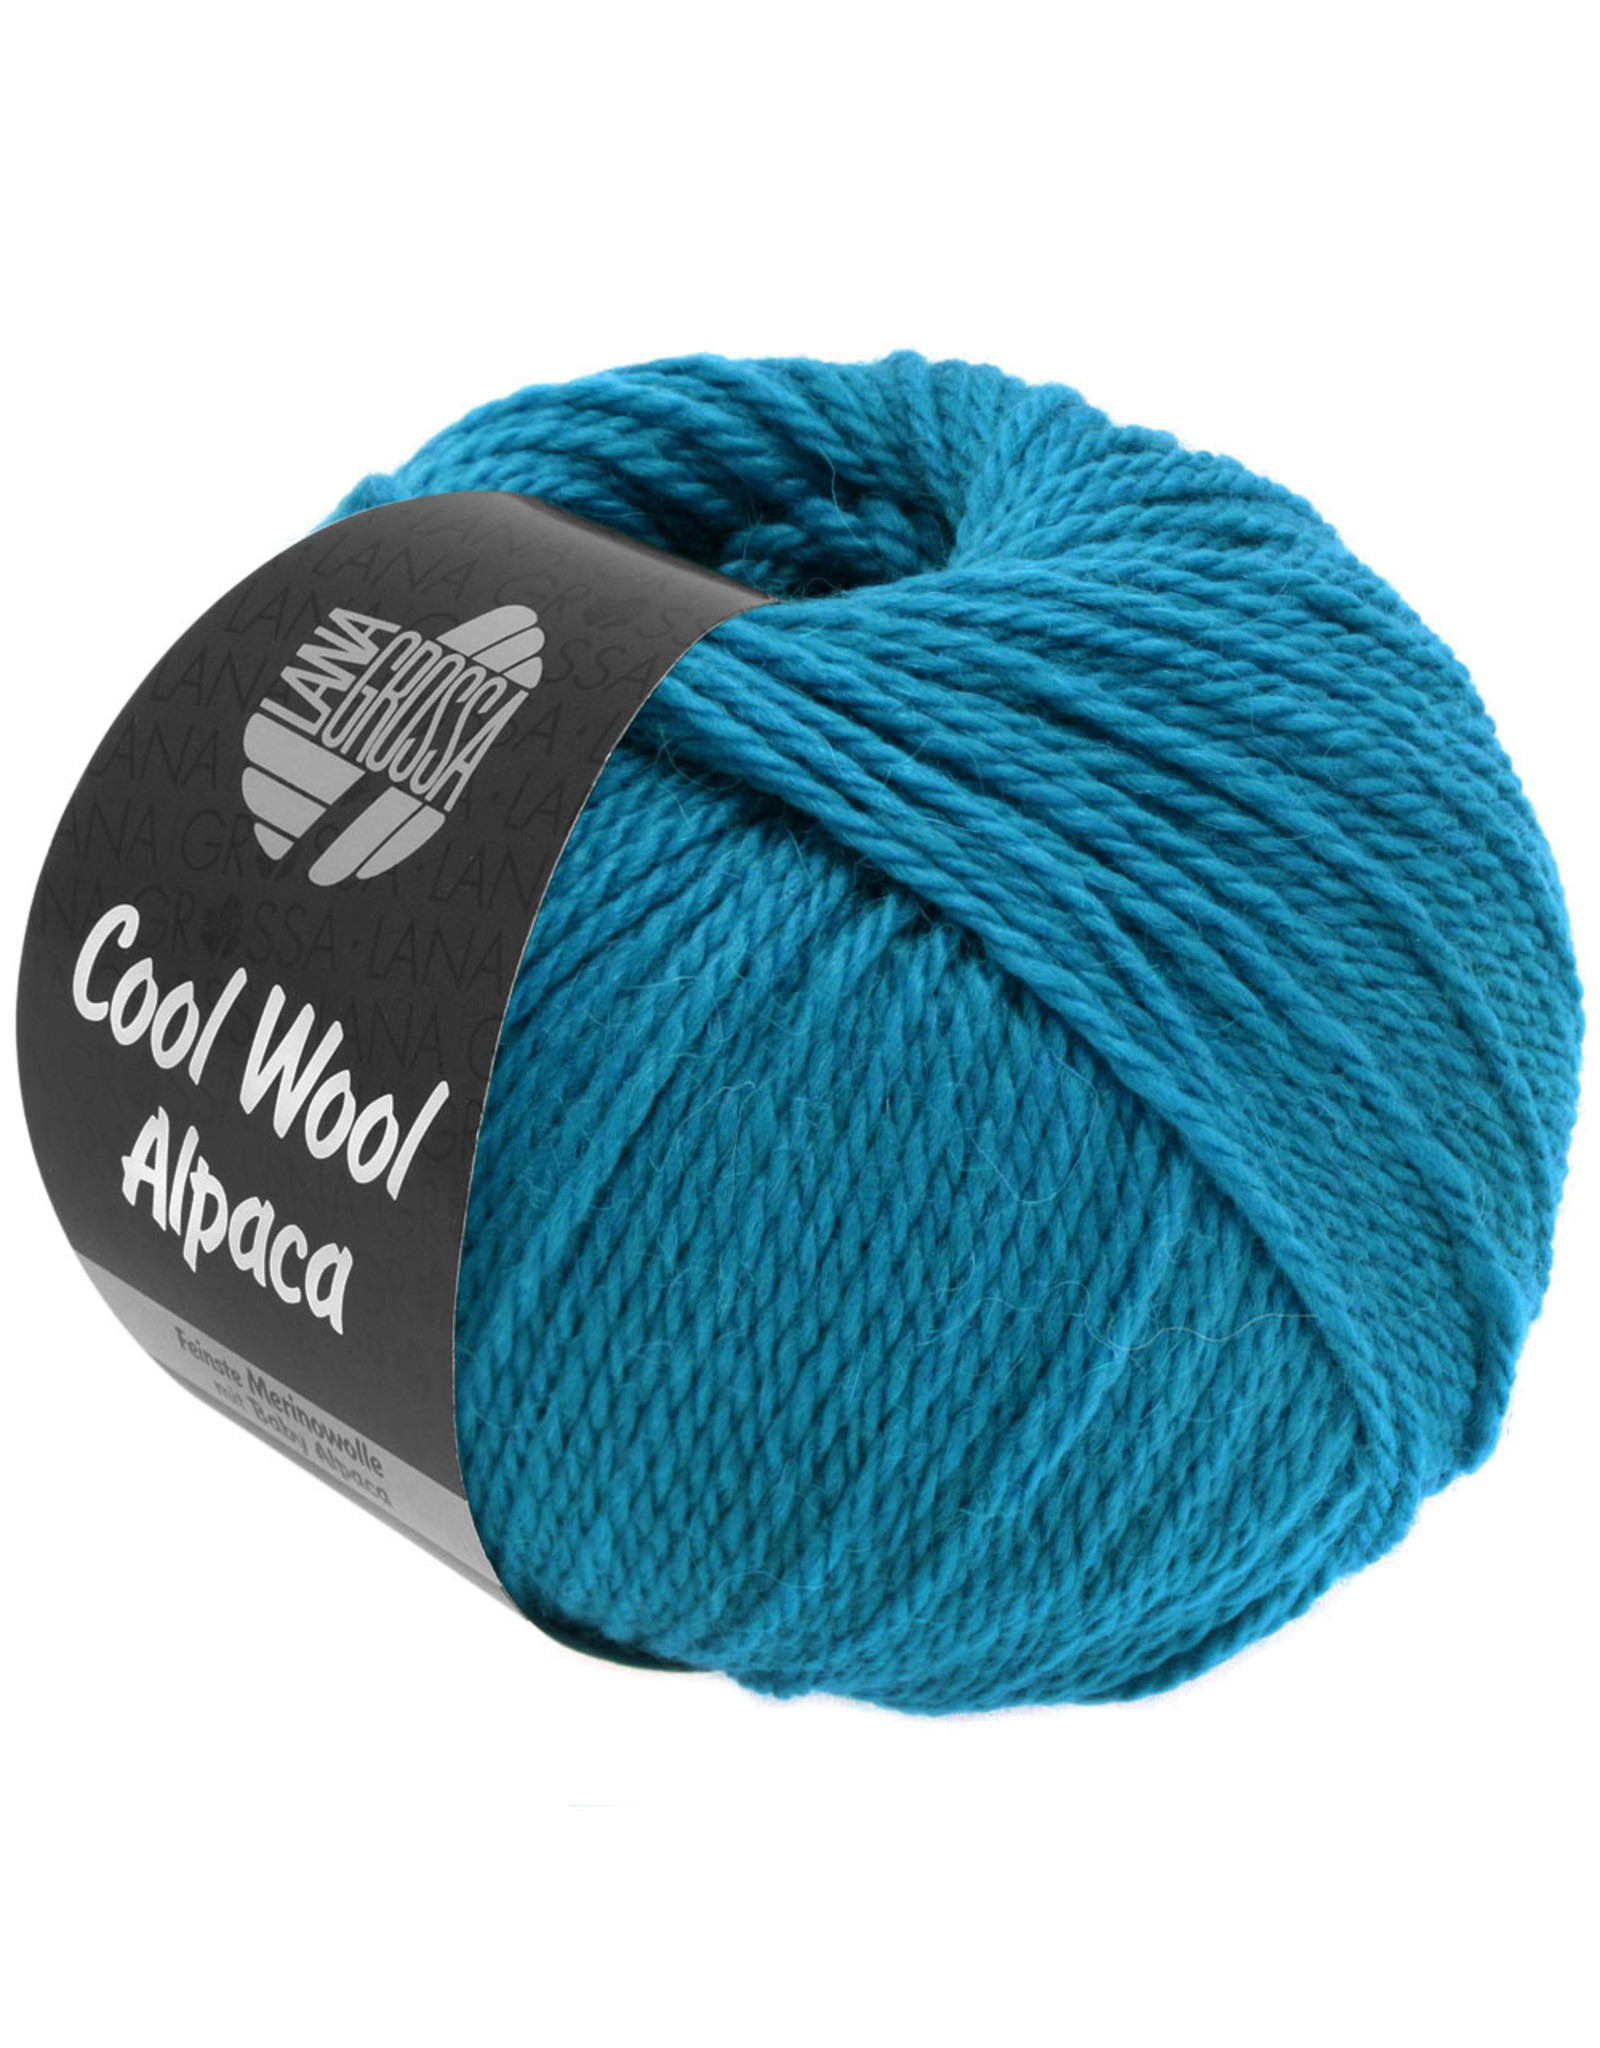 Lana Grossa Lana Grossa Cool wool alpaca 040